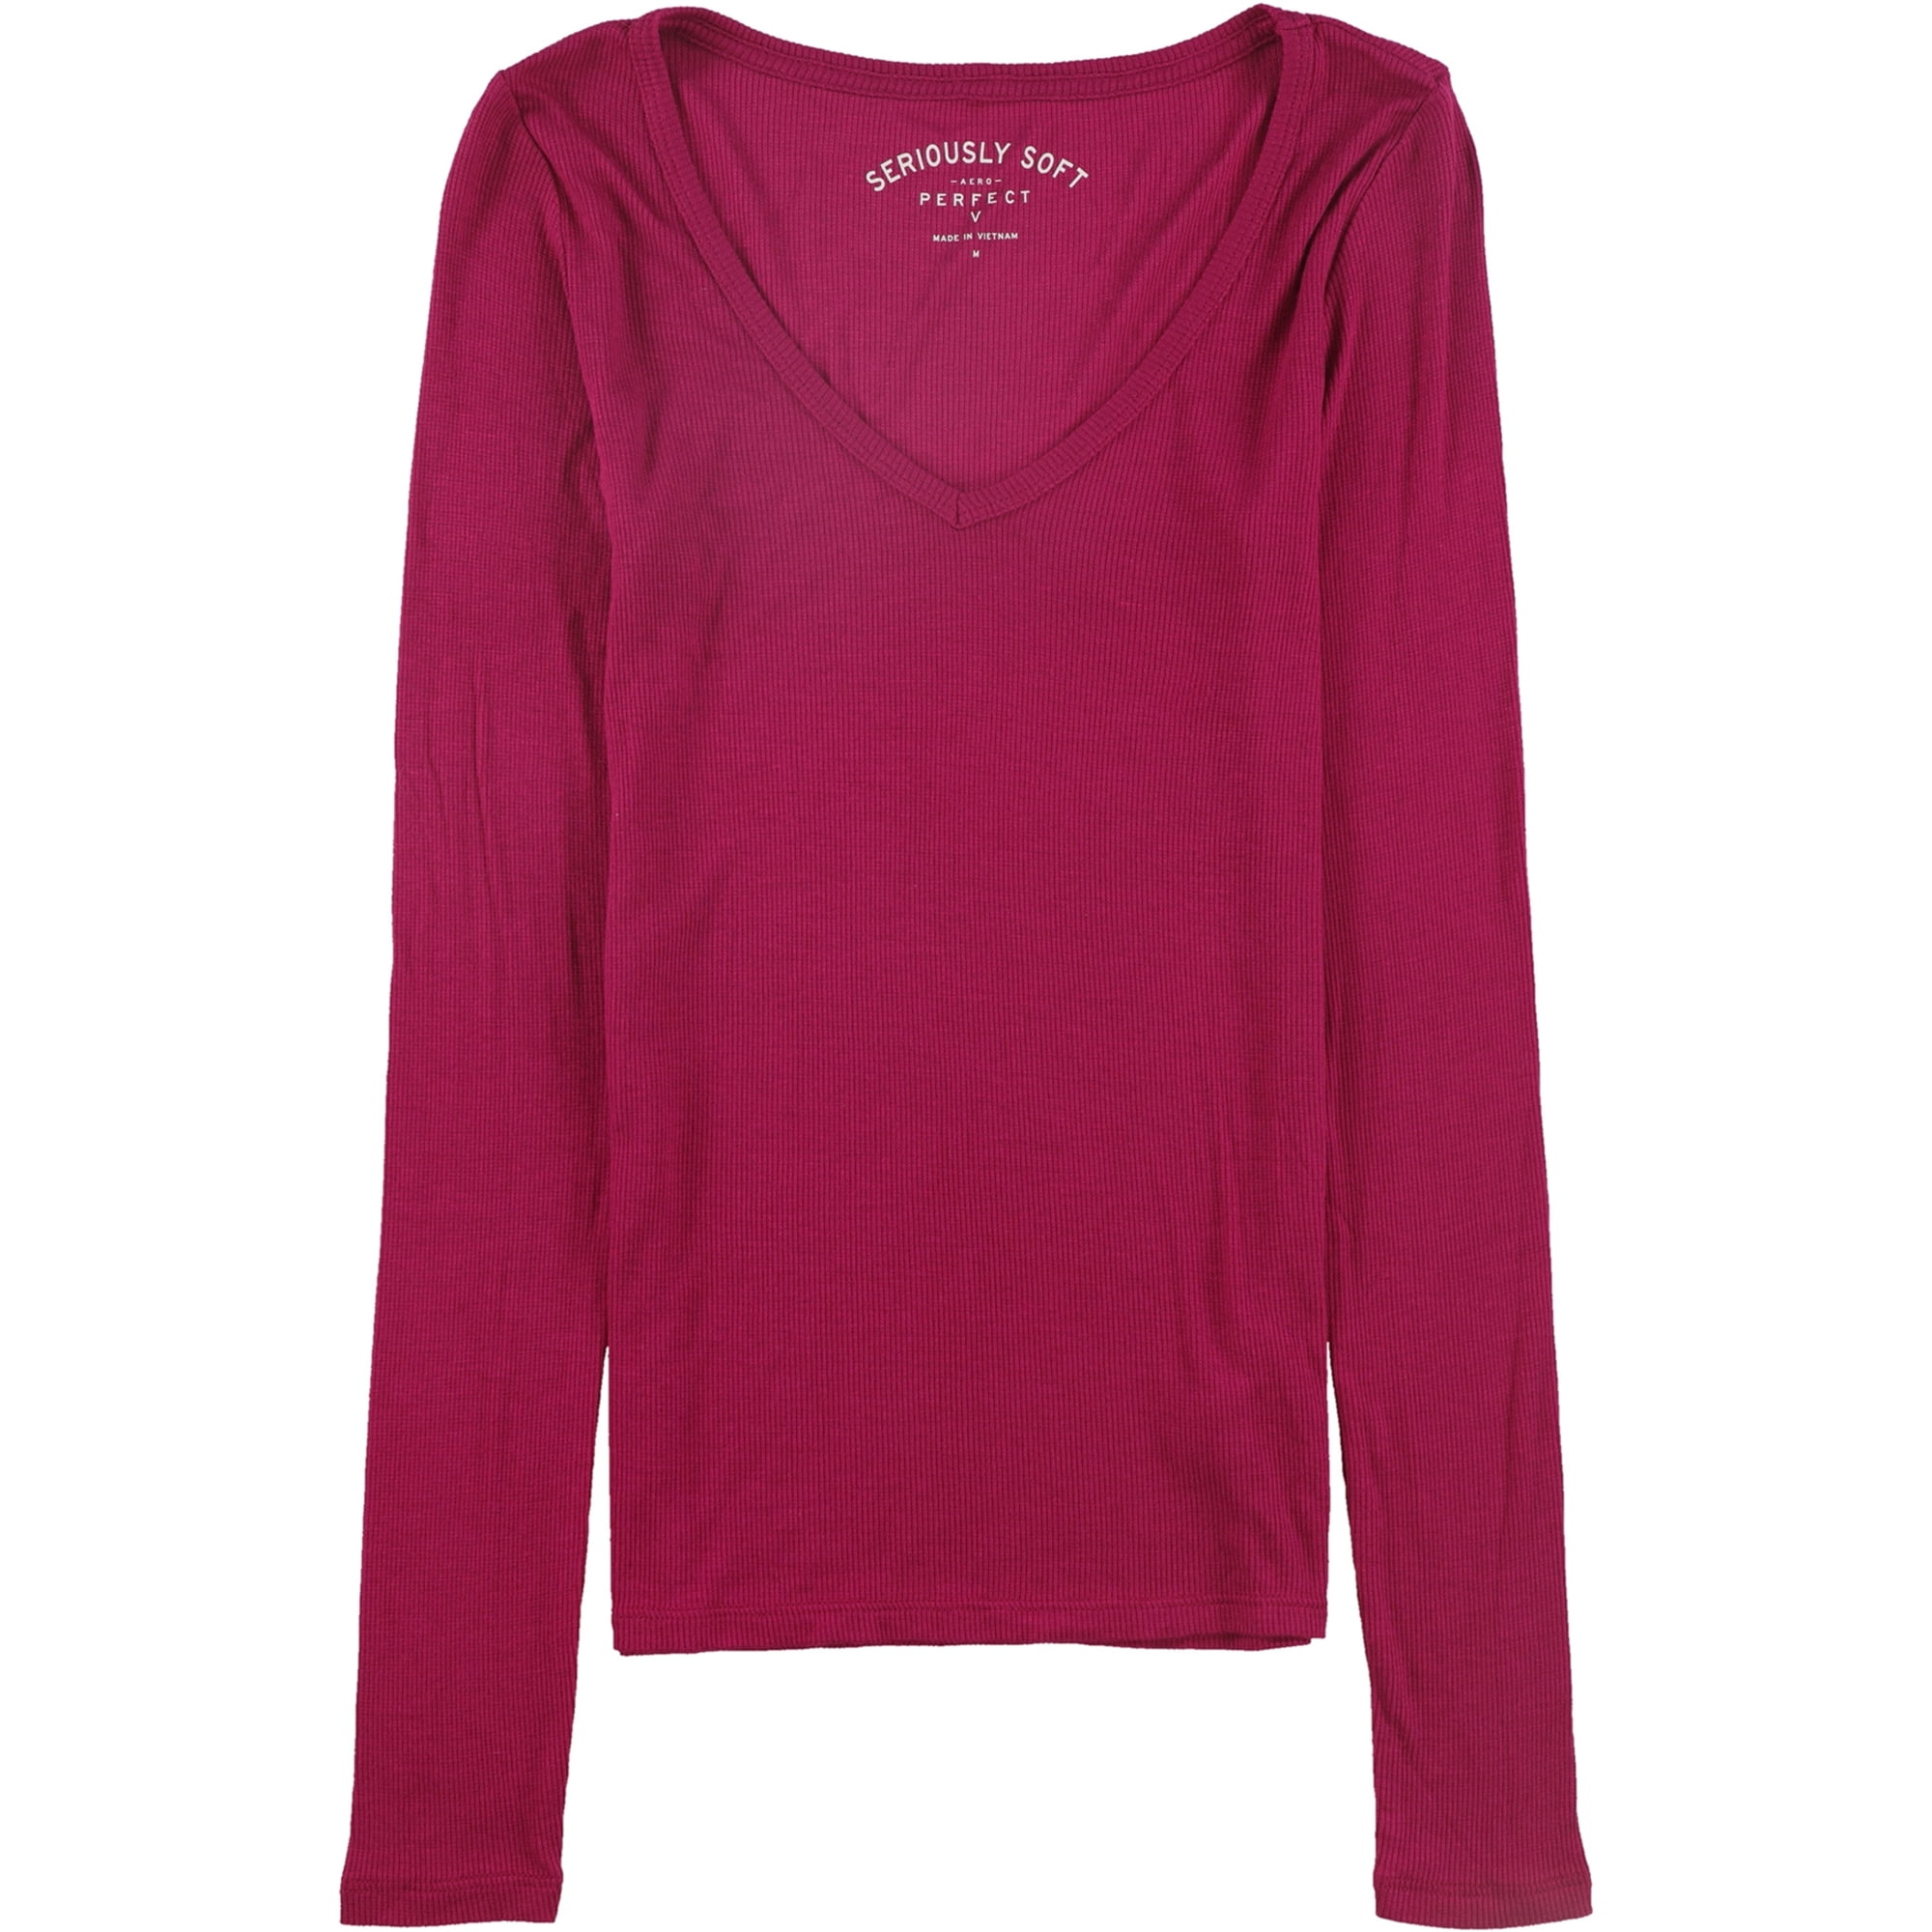 Aeropostale Womens Seriously Soft Ribbed Basic T-Shirt, Pink, X-Small 